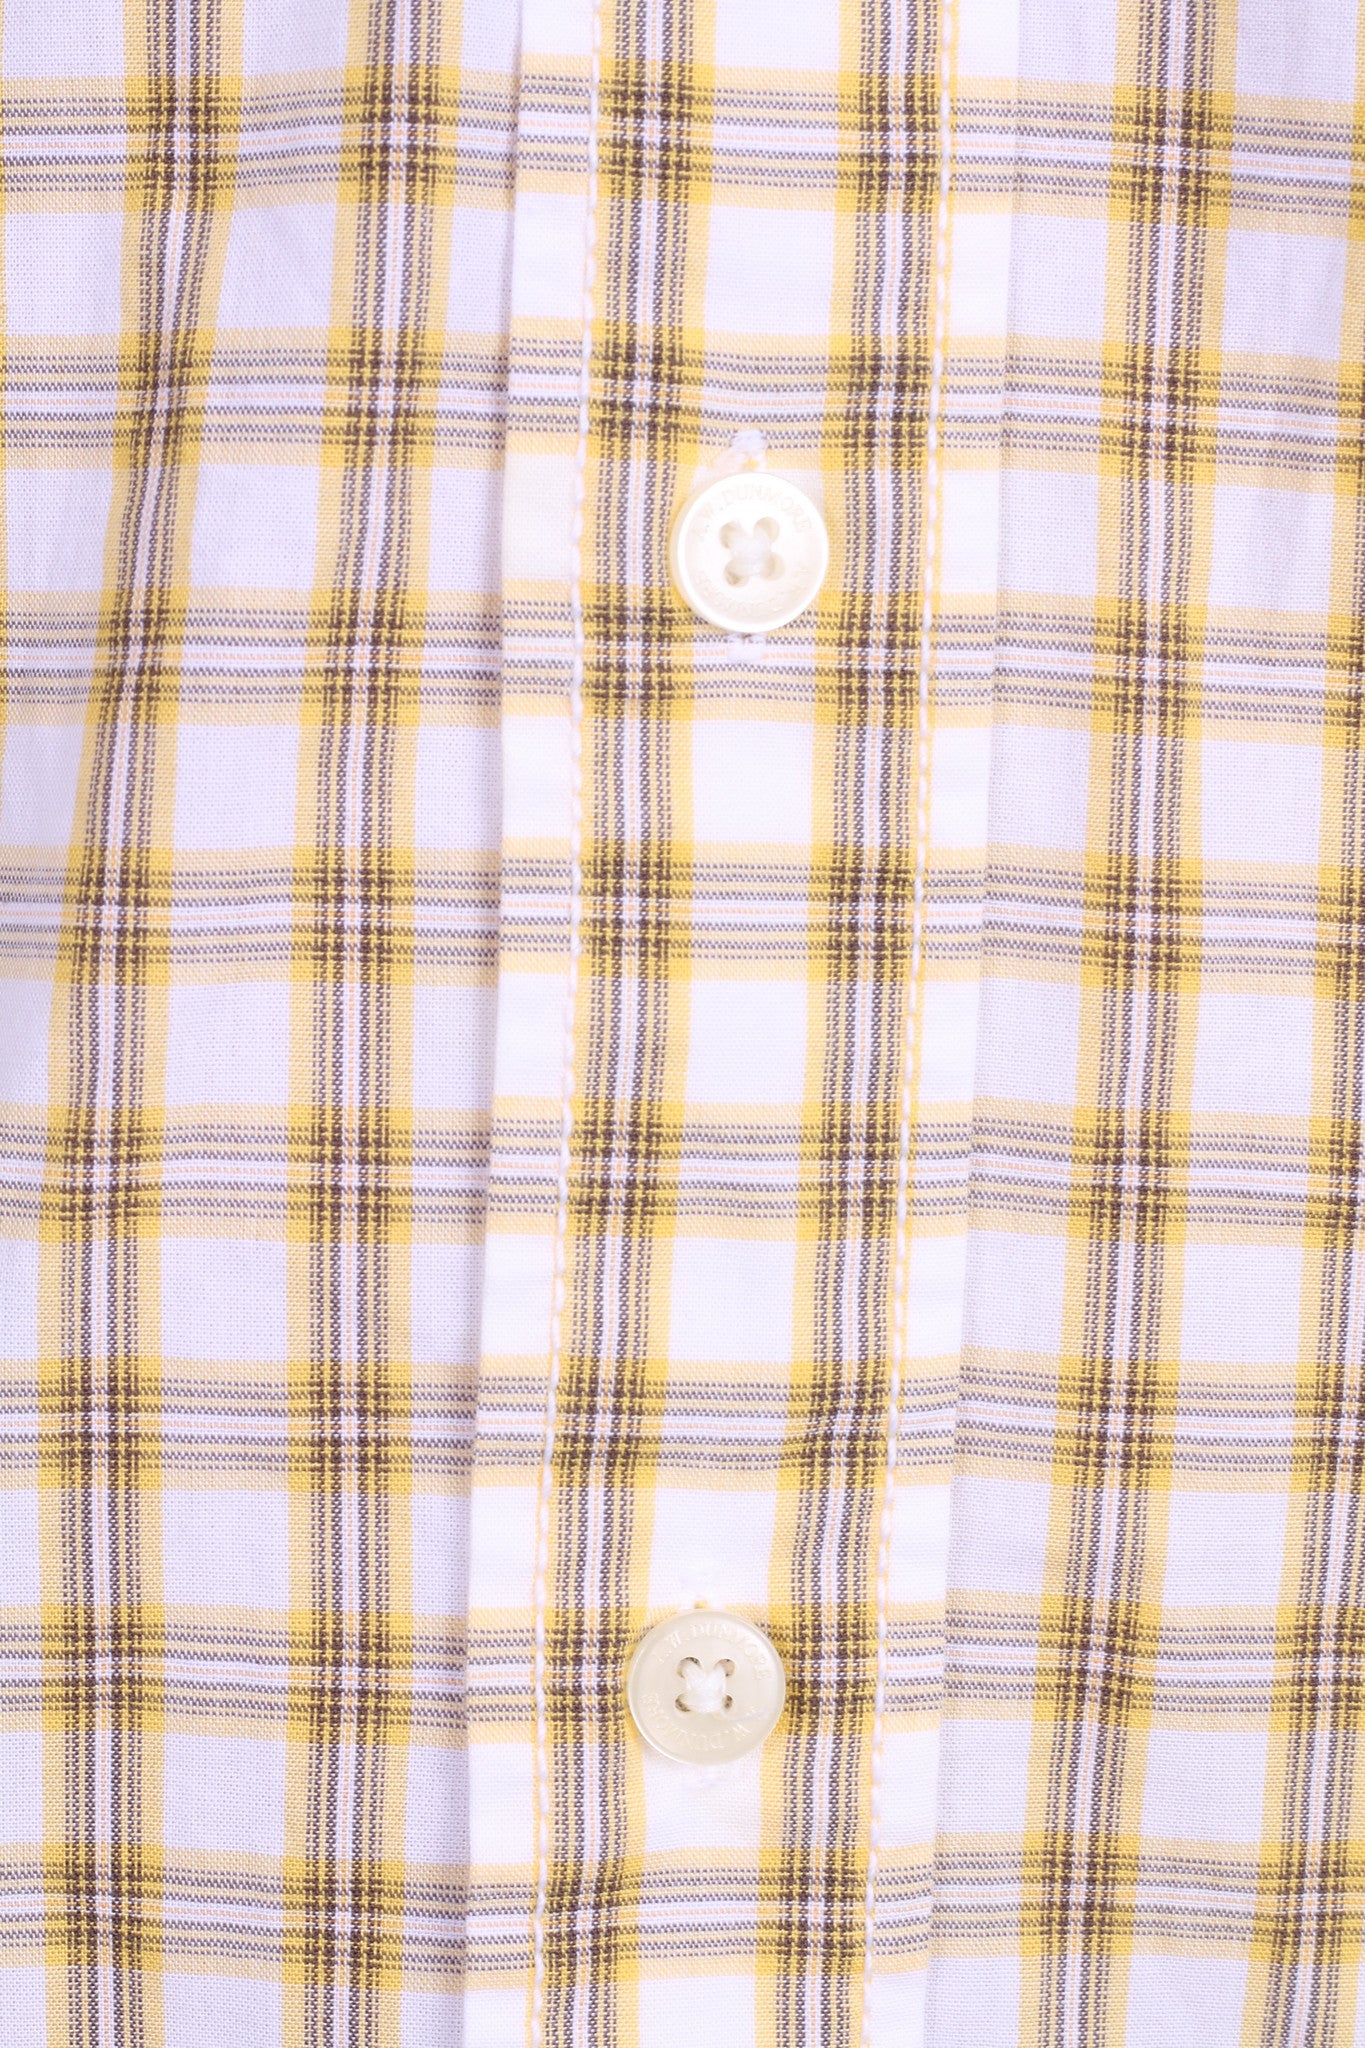 A.W. Dunmore Mens S Casual Shirt Check Yellow Cotton Short Sleeve - RetrospectClothes